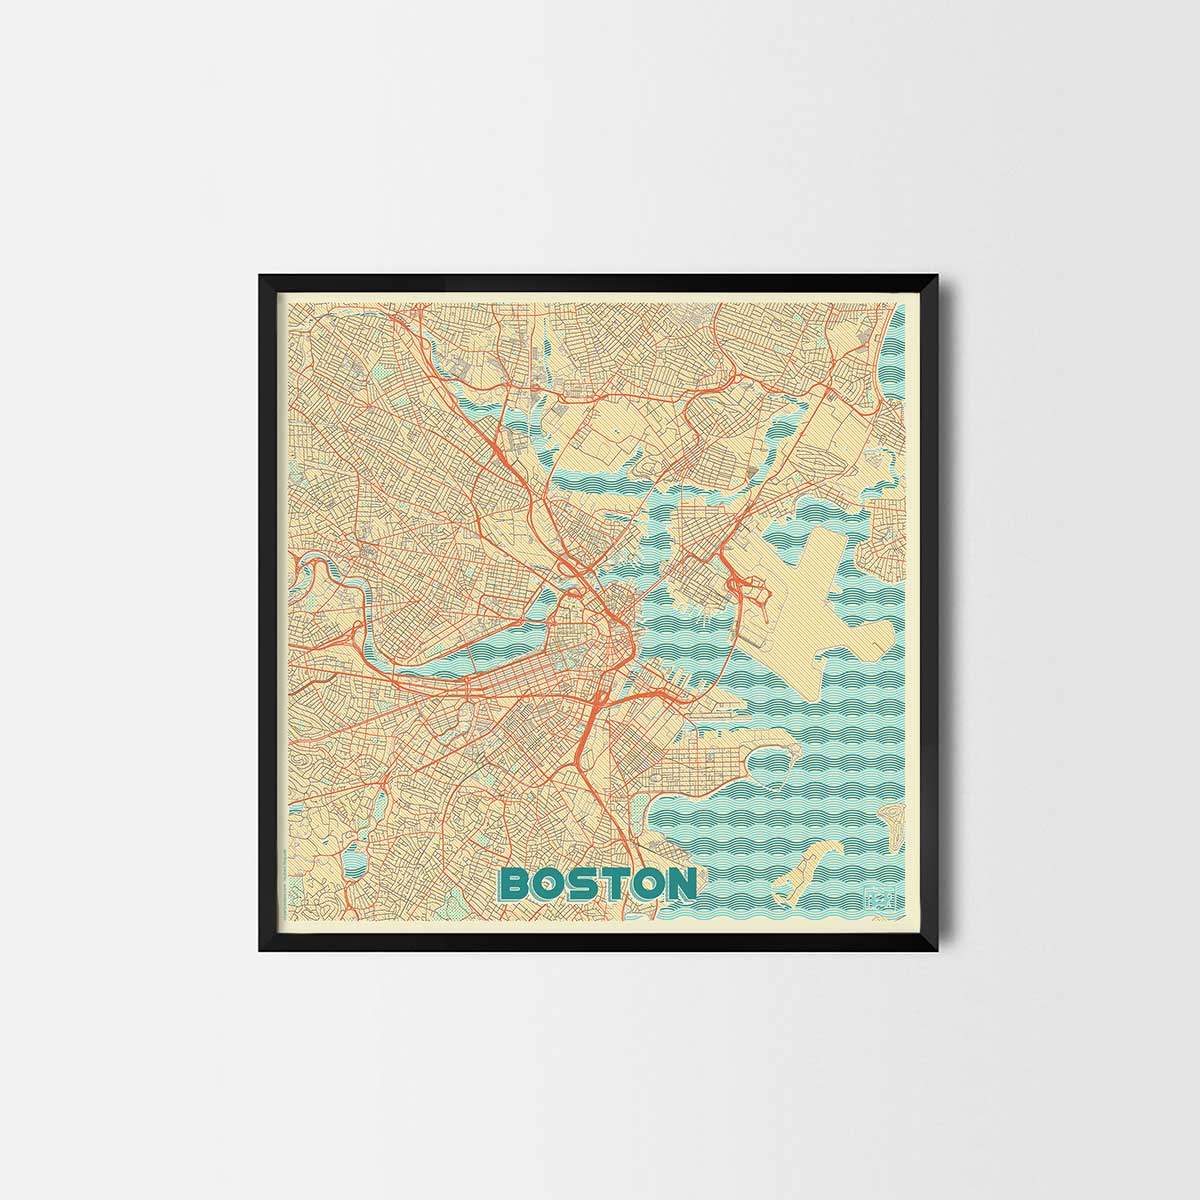 Boston City Prints city map art posters retro map posters city map prints city posters retro posters